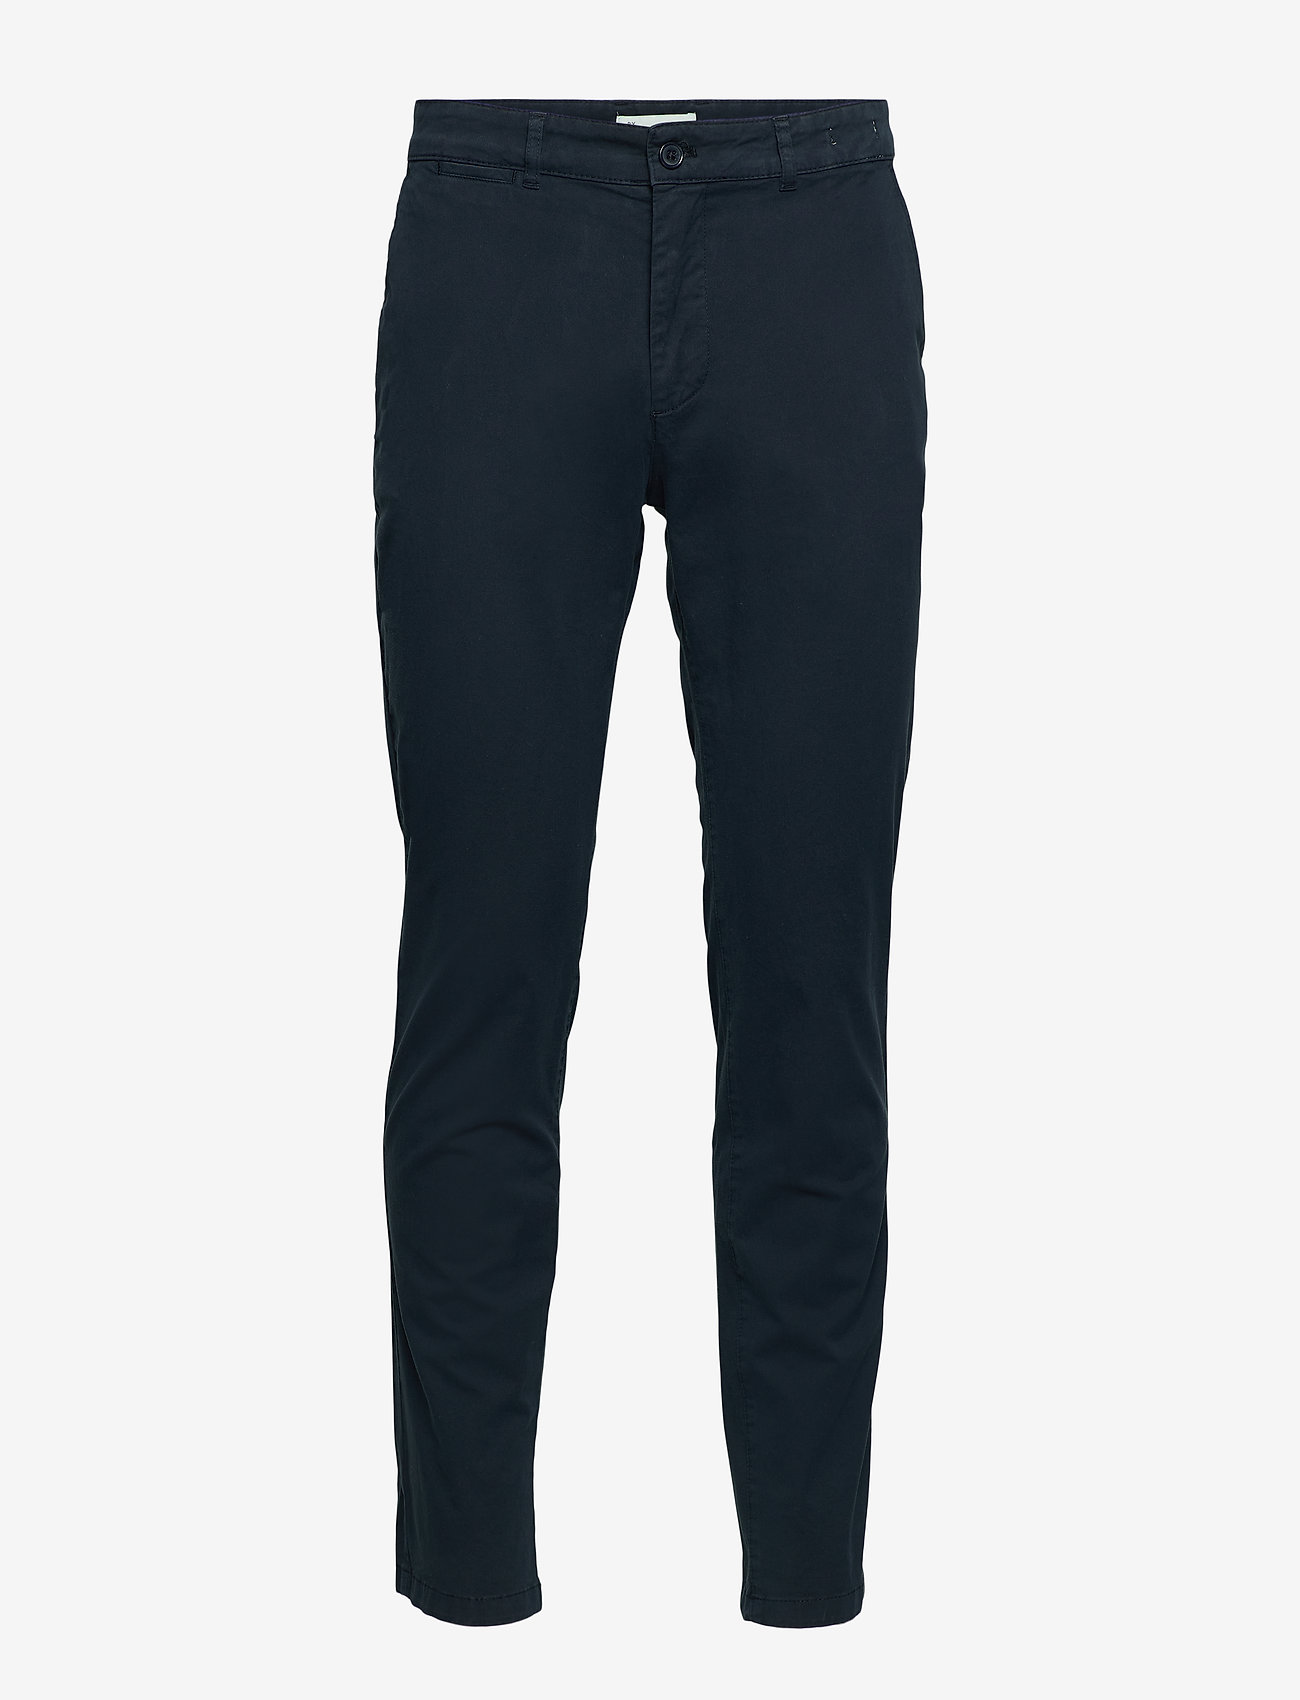 By Garment Makers - The Organic Chino Pants - chinot - navy blazer - 0